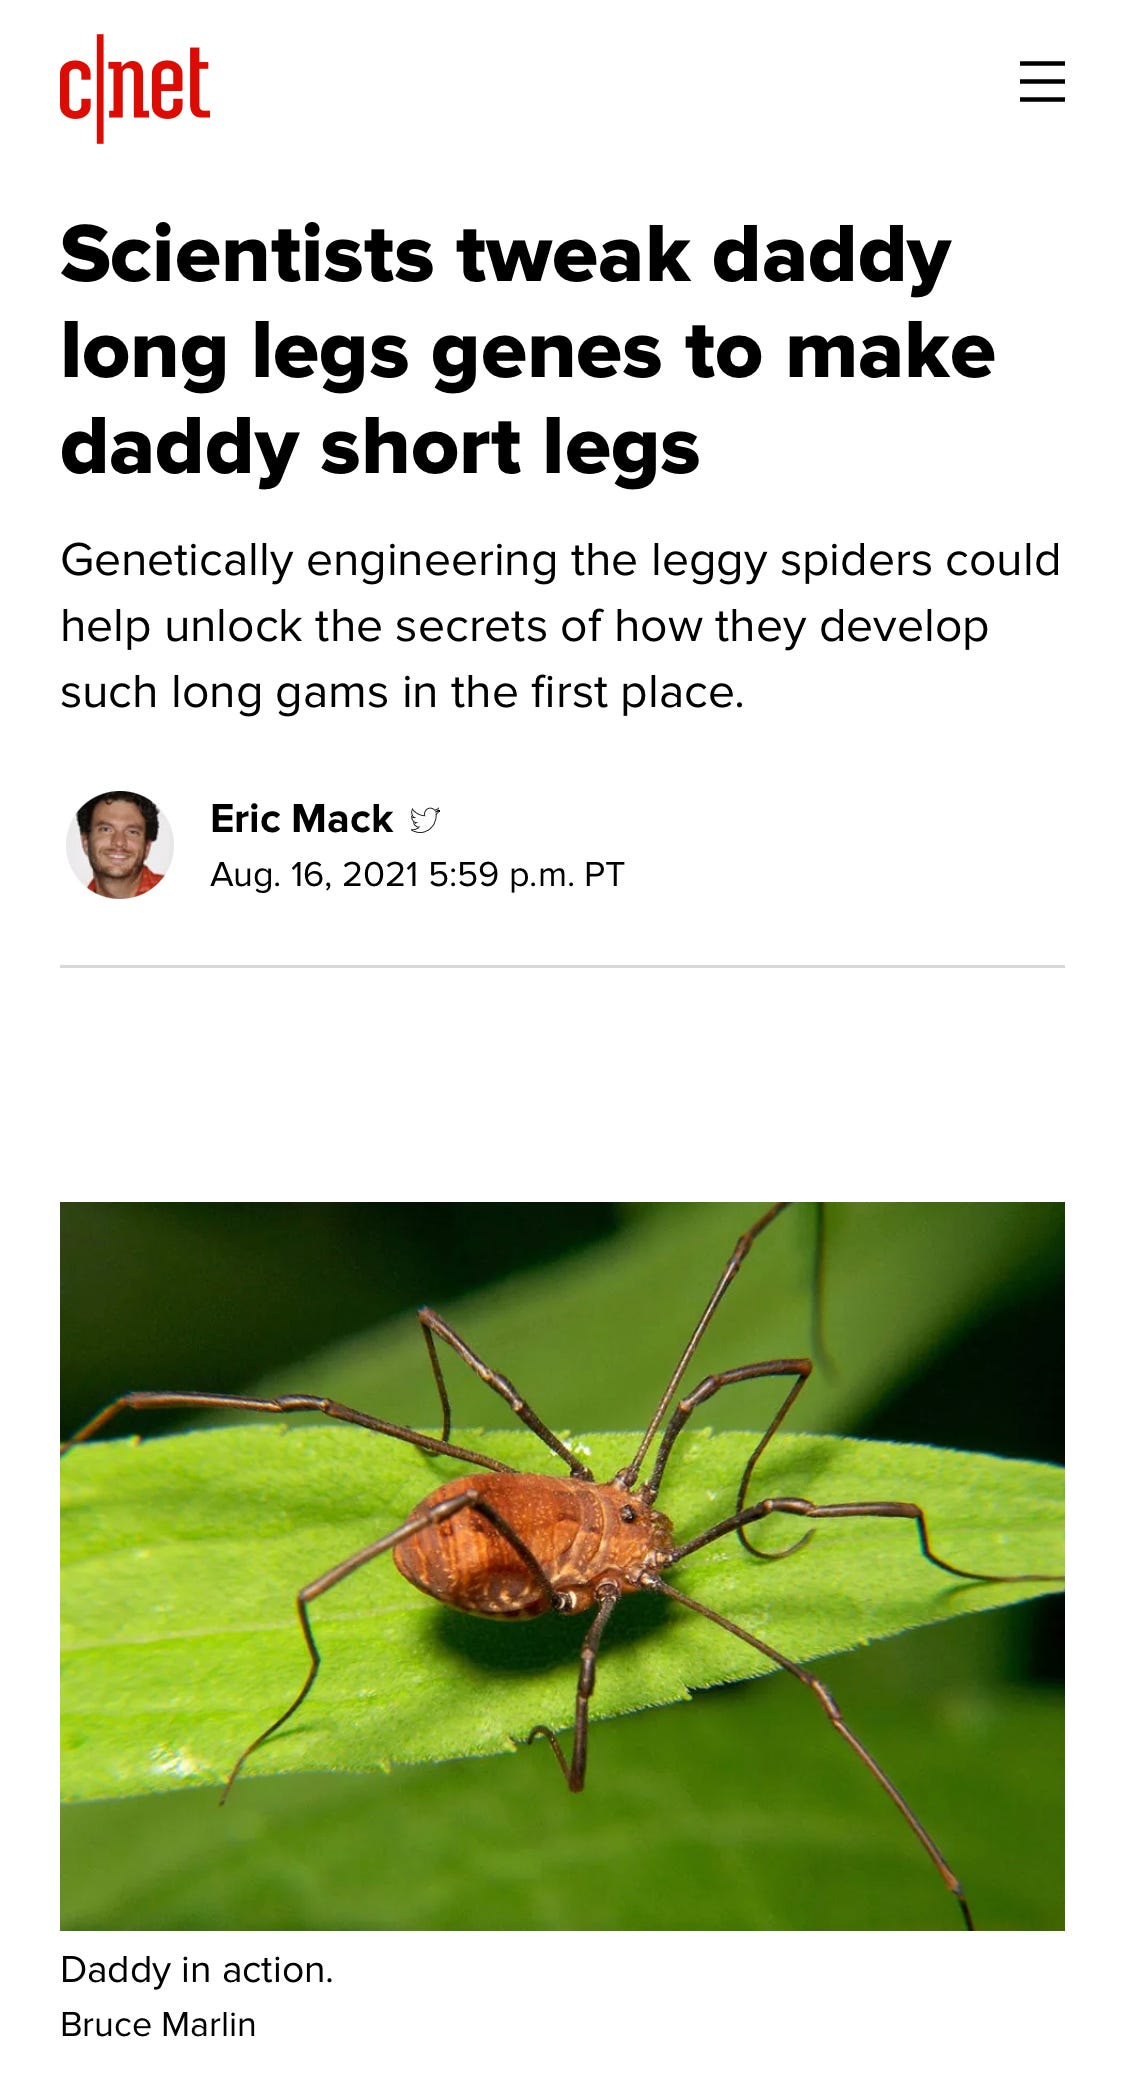 A bug on a leaf

Description automatically generated with medium confidence